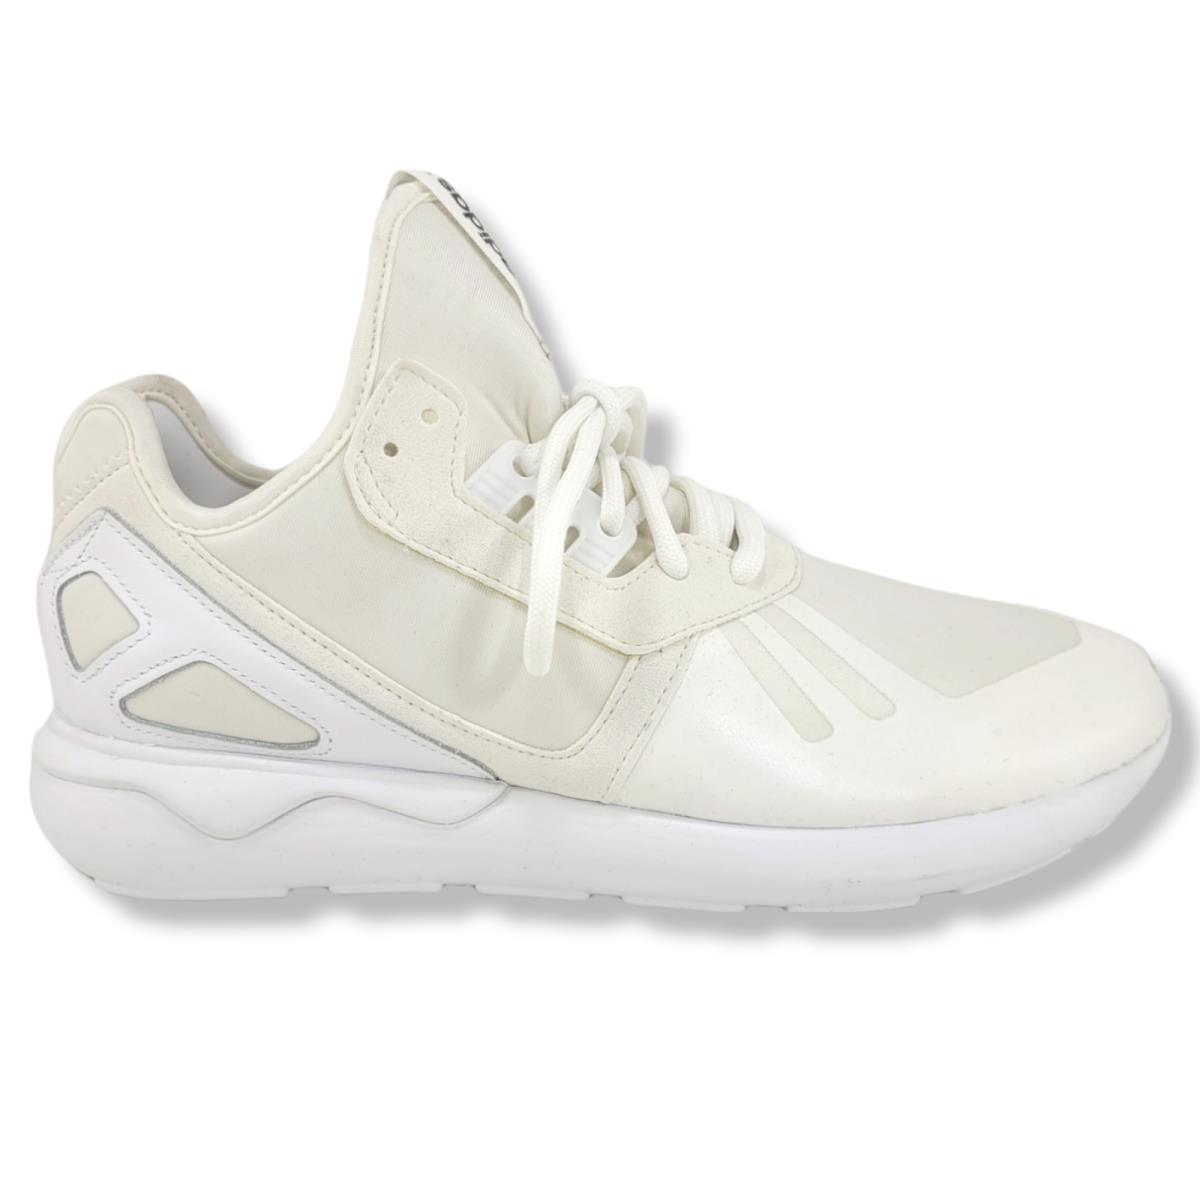 Adidas Originals Tubular Runner S83141 Mens Shoes Leather White Sport SZ 11